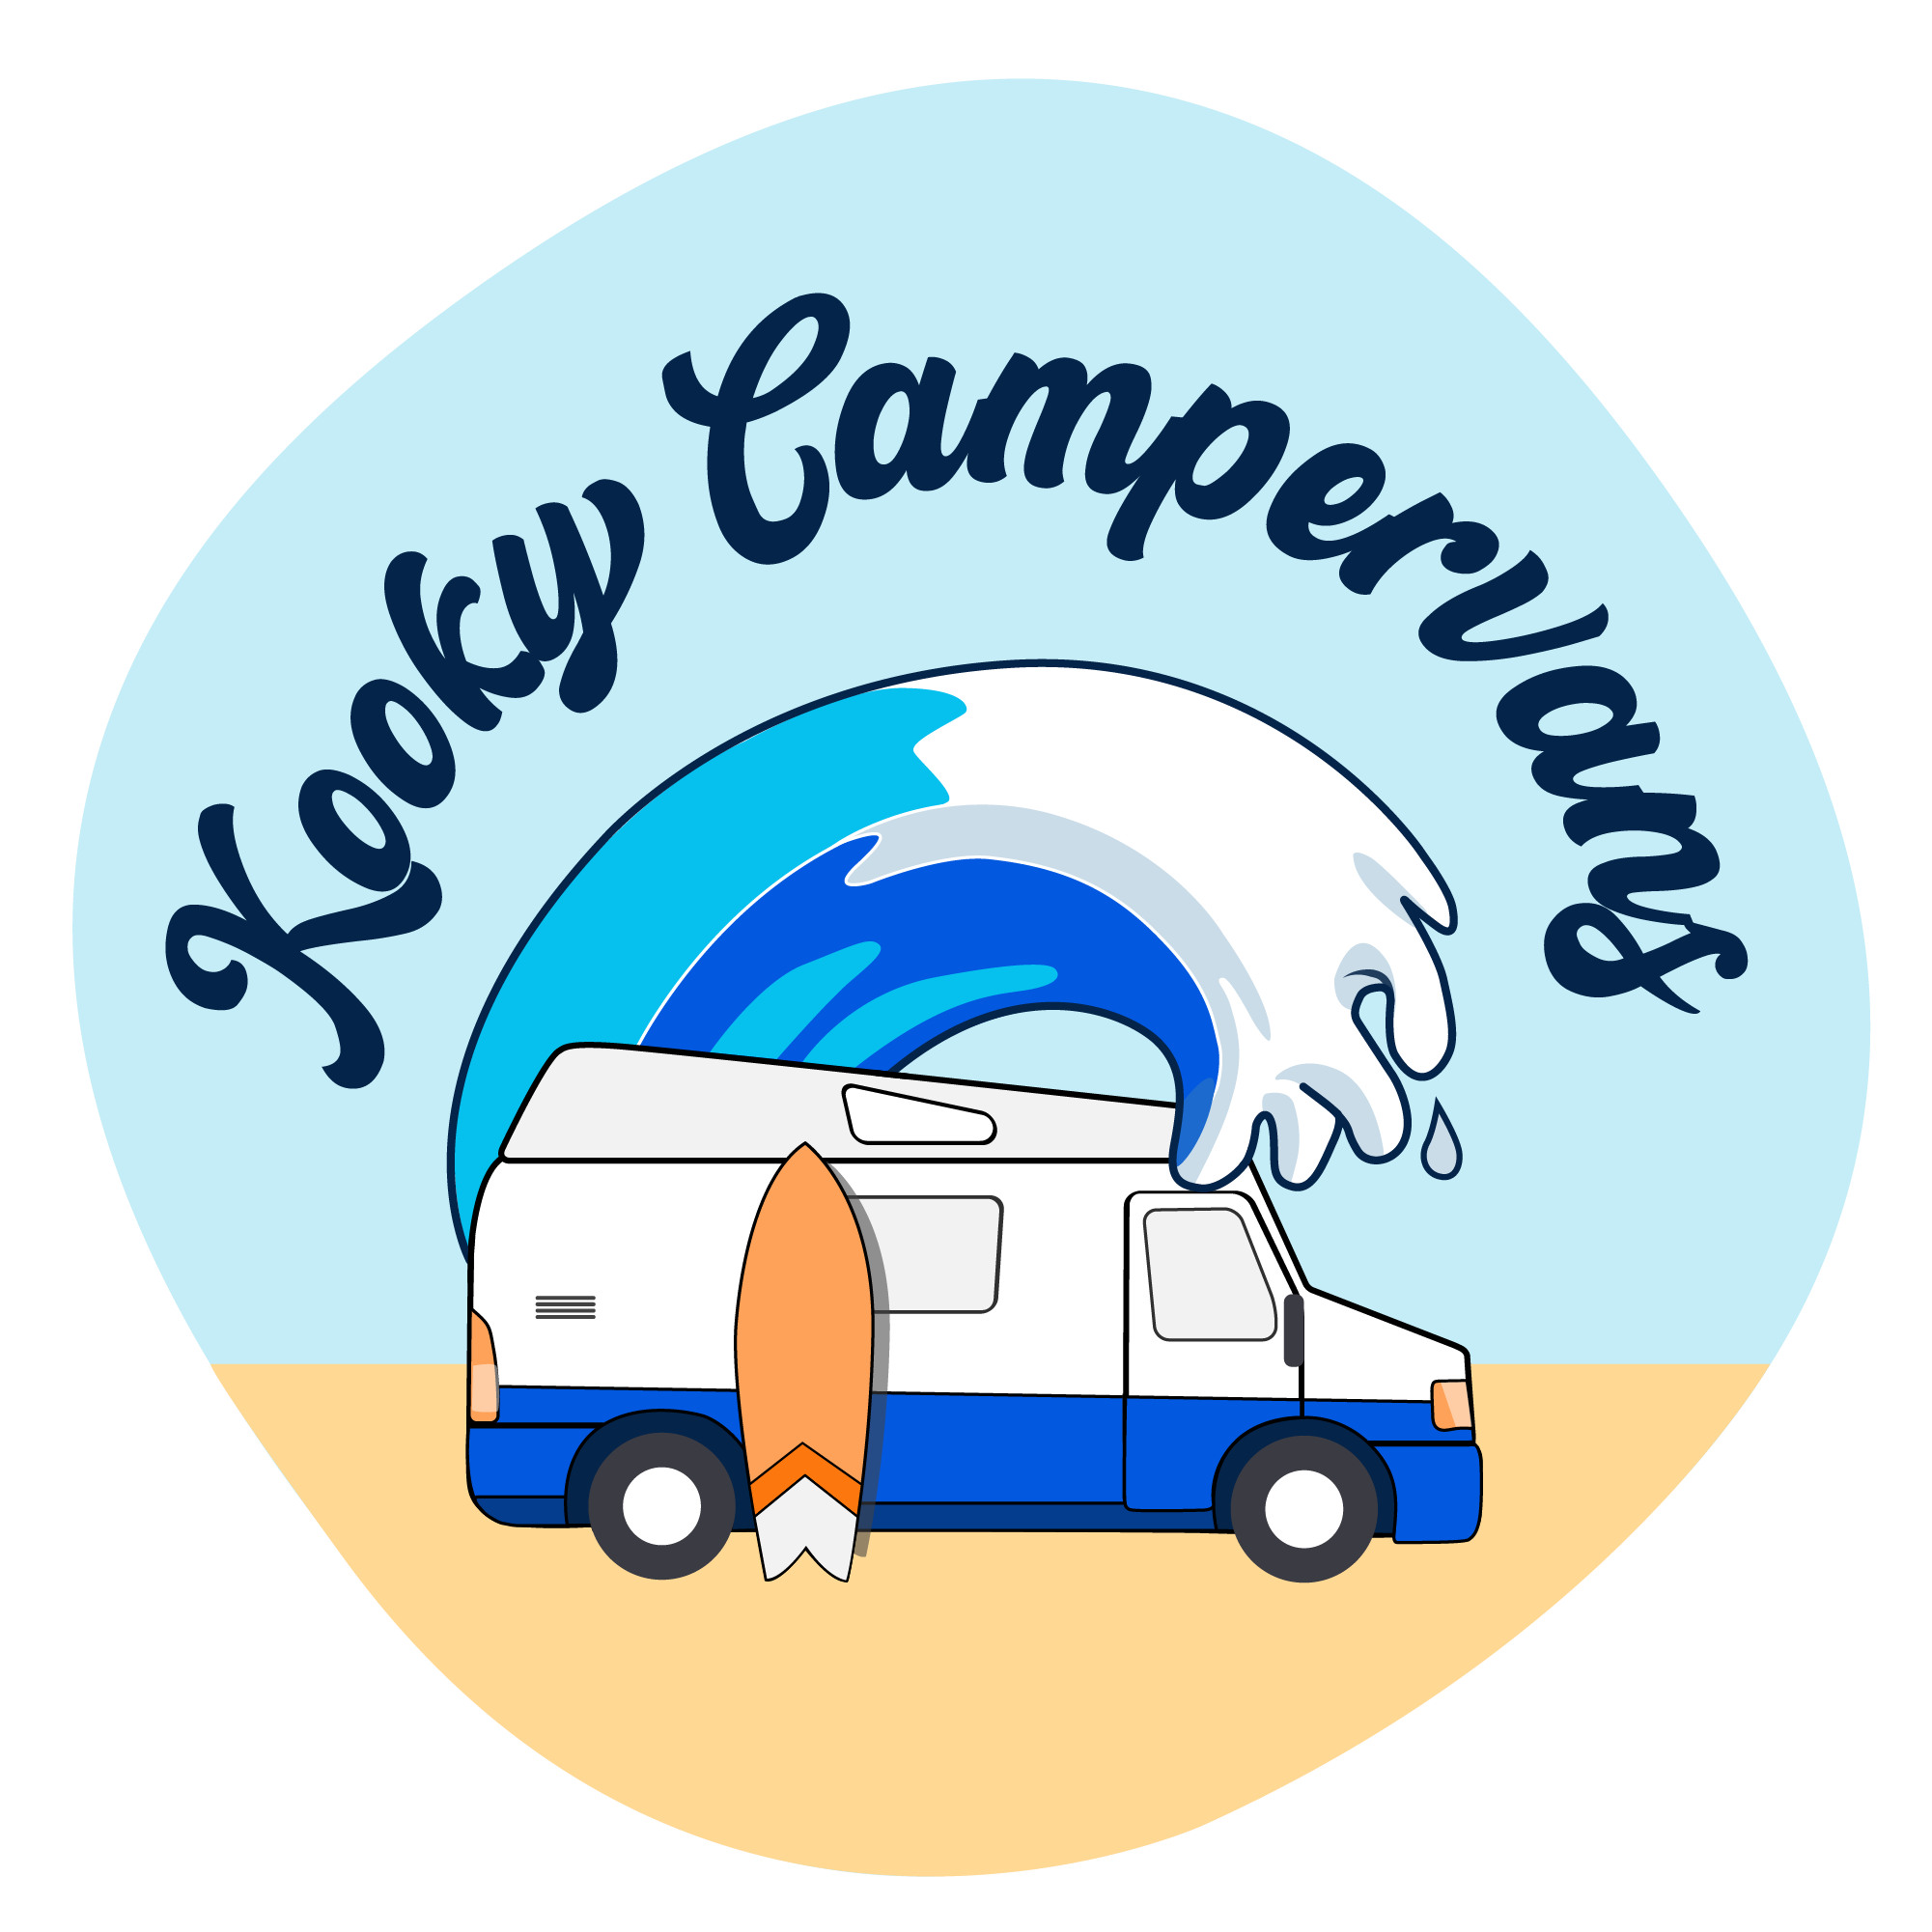 Kooky Campers round logo